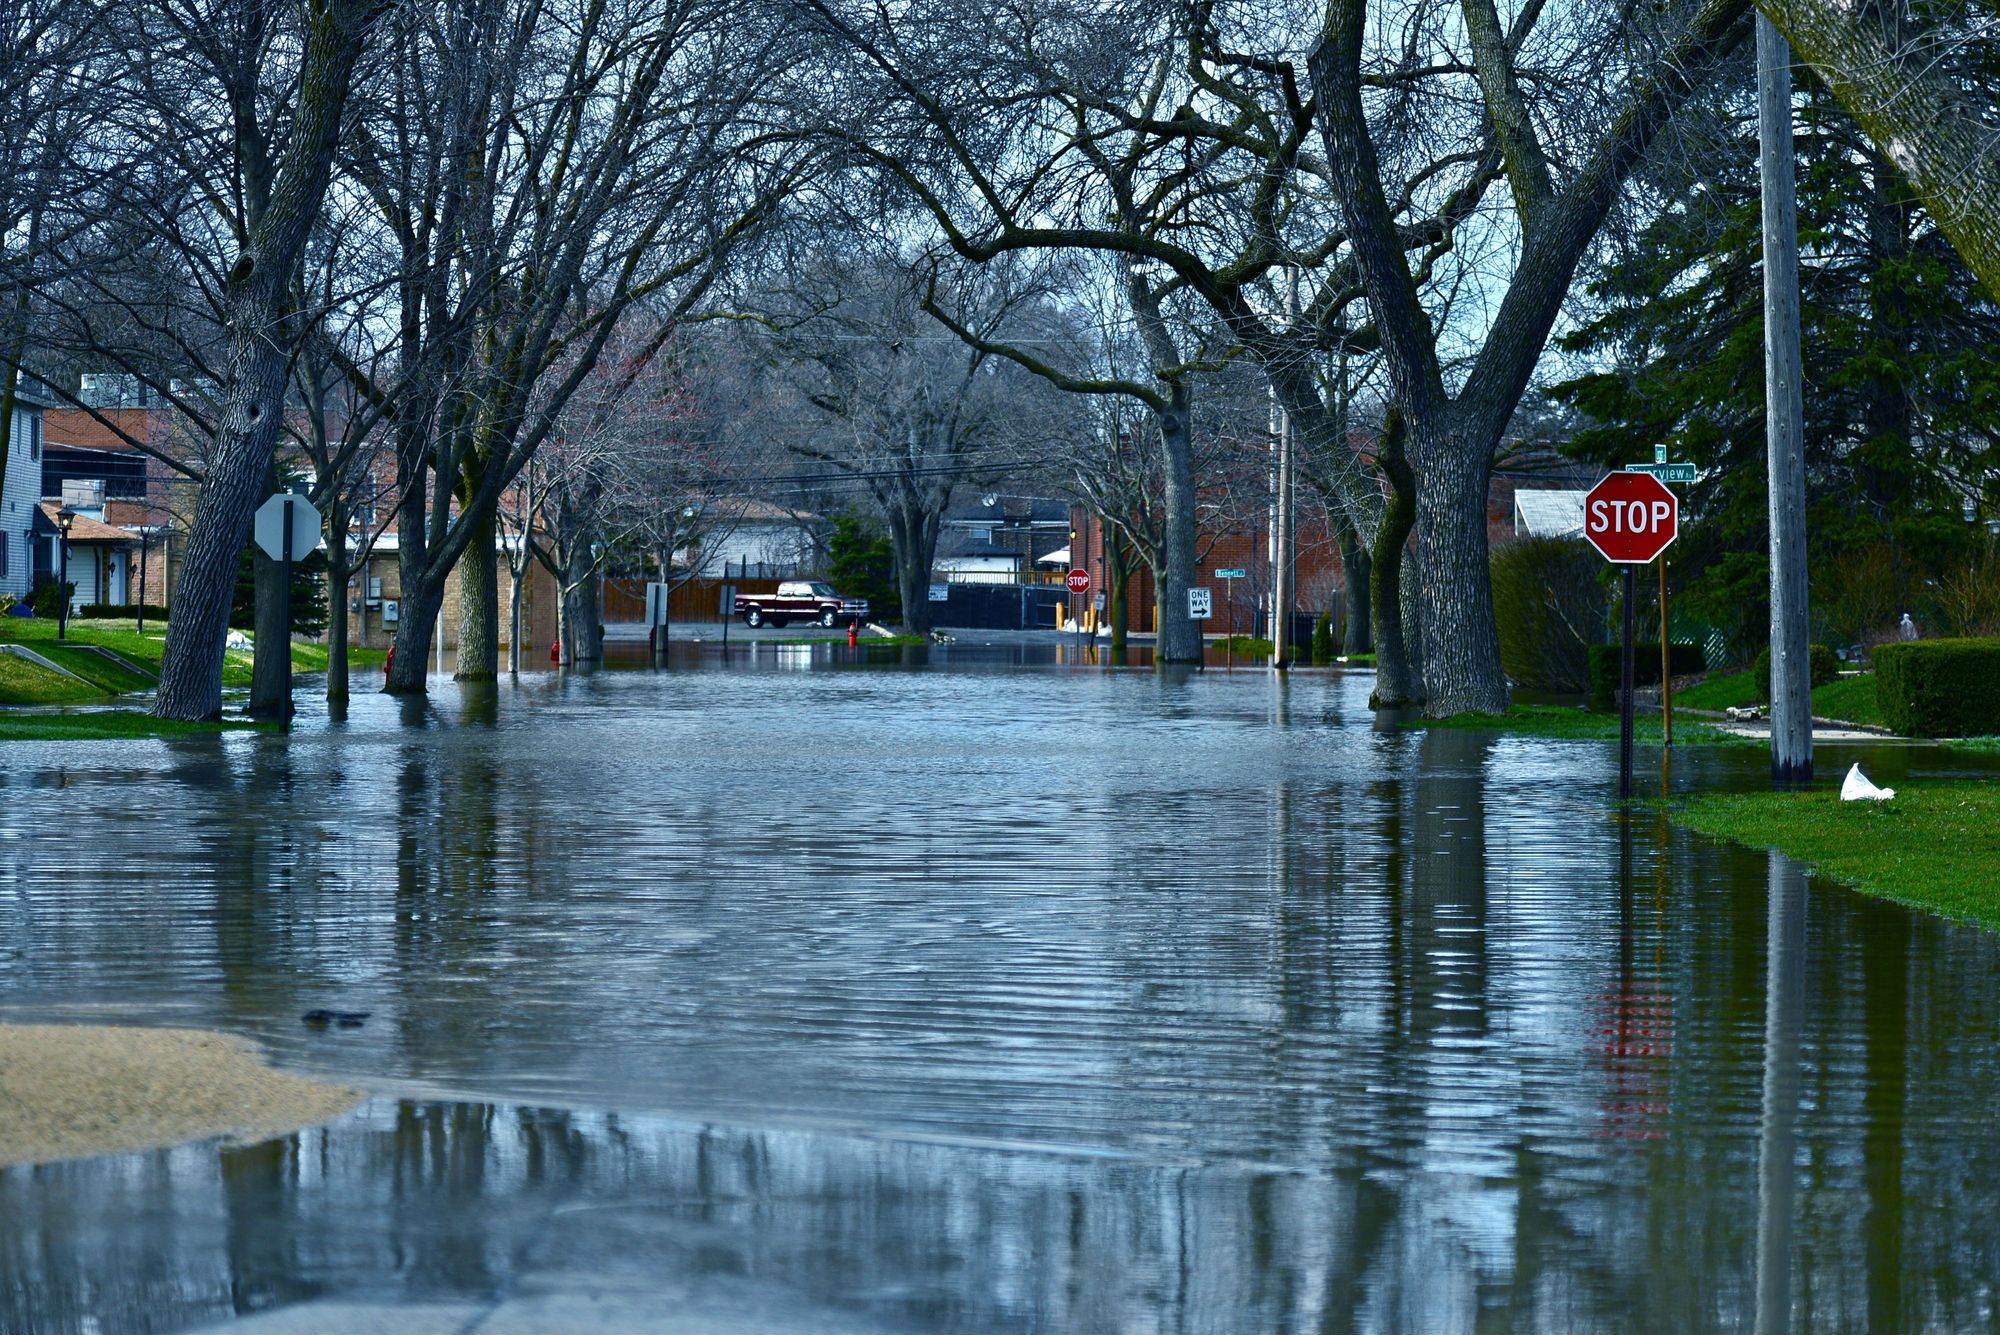 Flood waters fill a neighborhood street - sewage disposal system incident